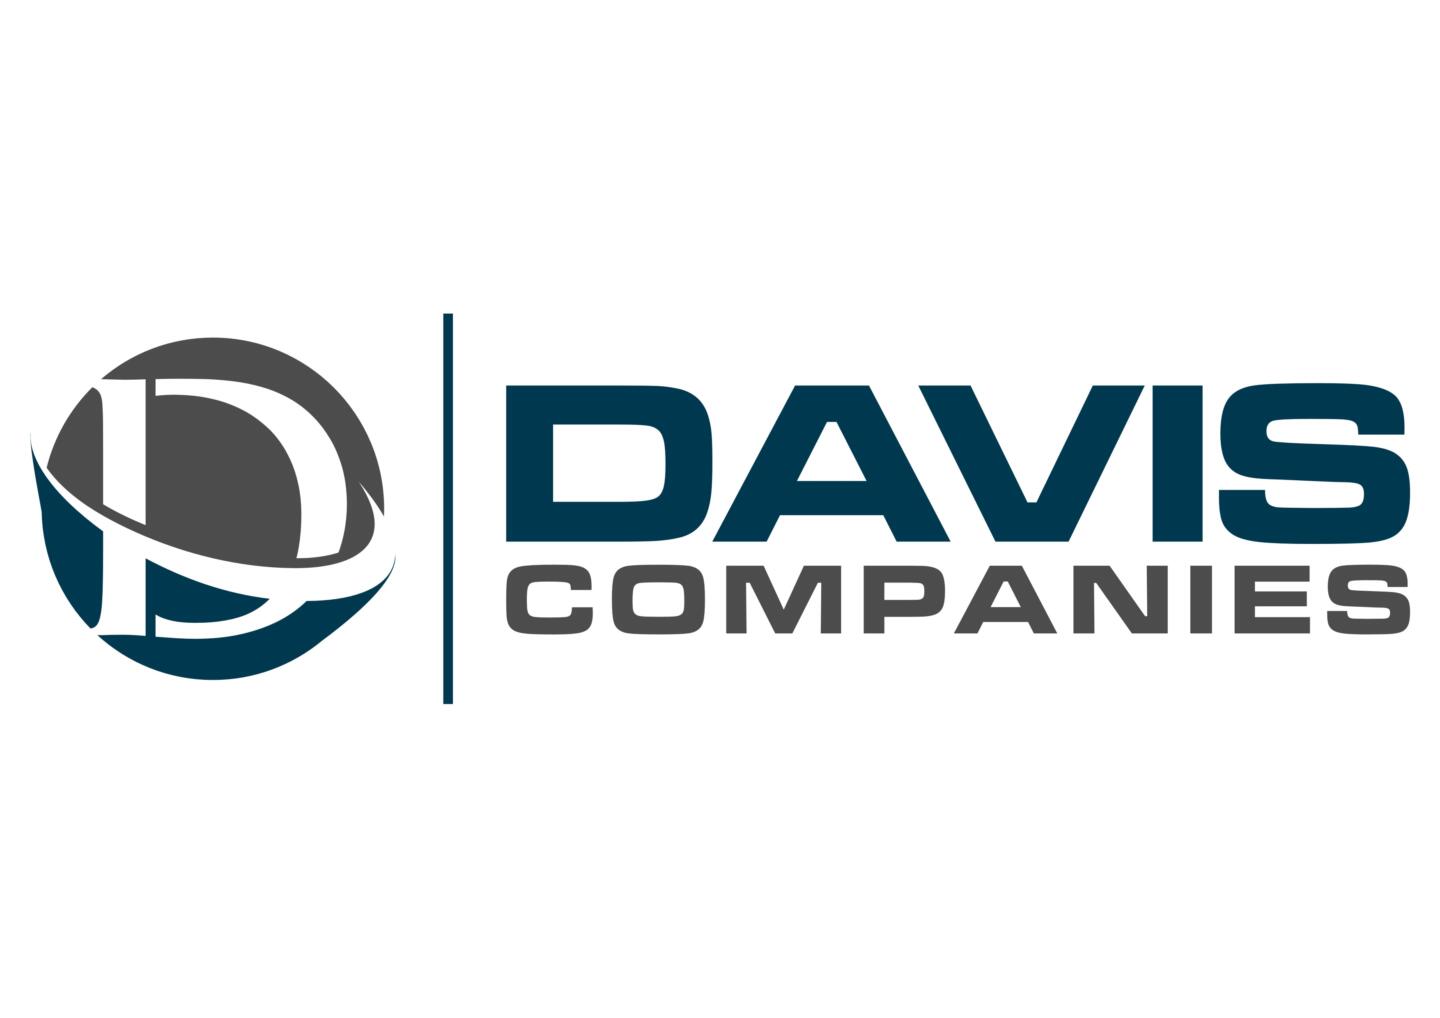 The DAVIS Companies logo